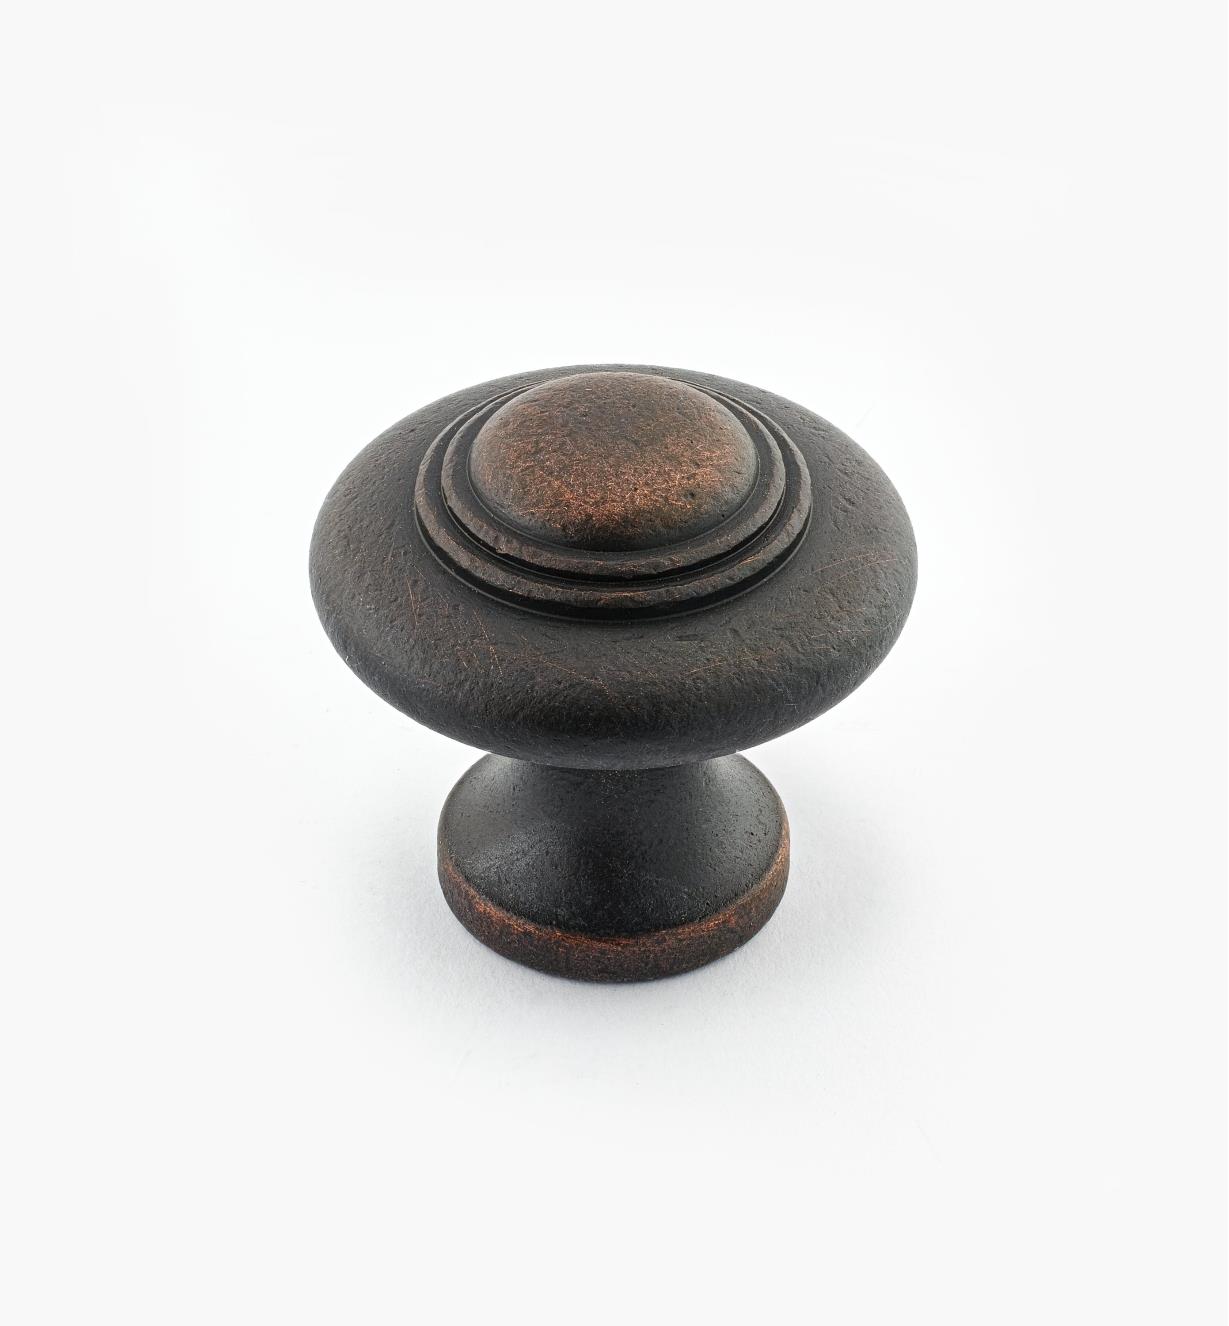 02W3053 - 1 5/16" x 1 1/4" Cast Brass Ring Knob, Weathered Bronze